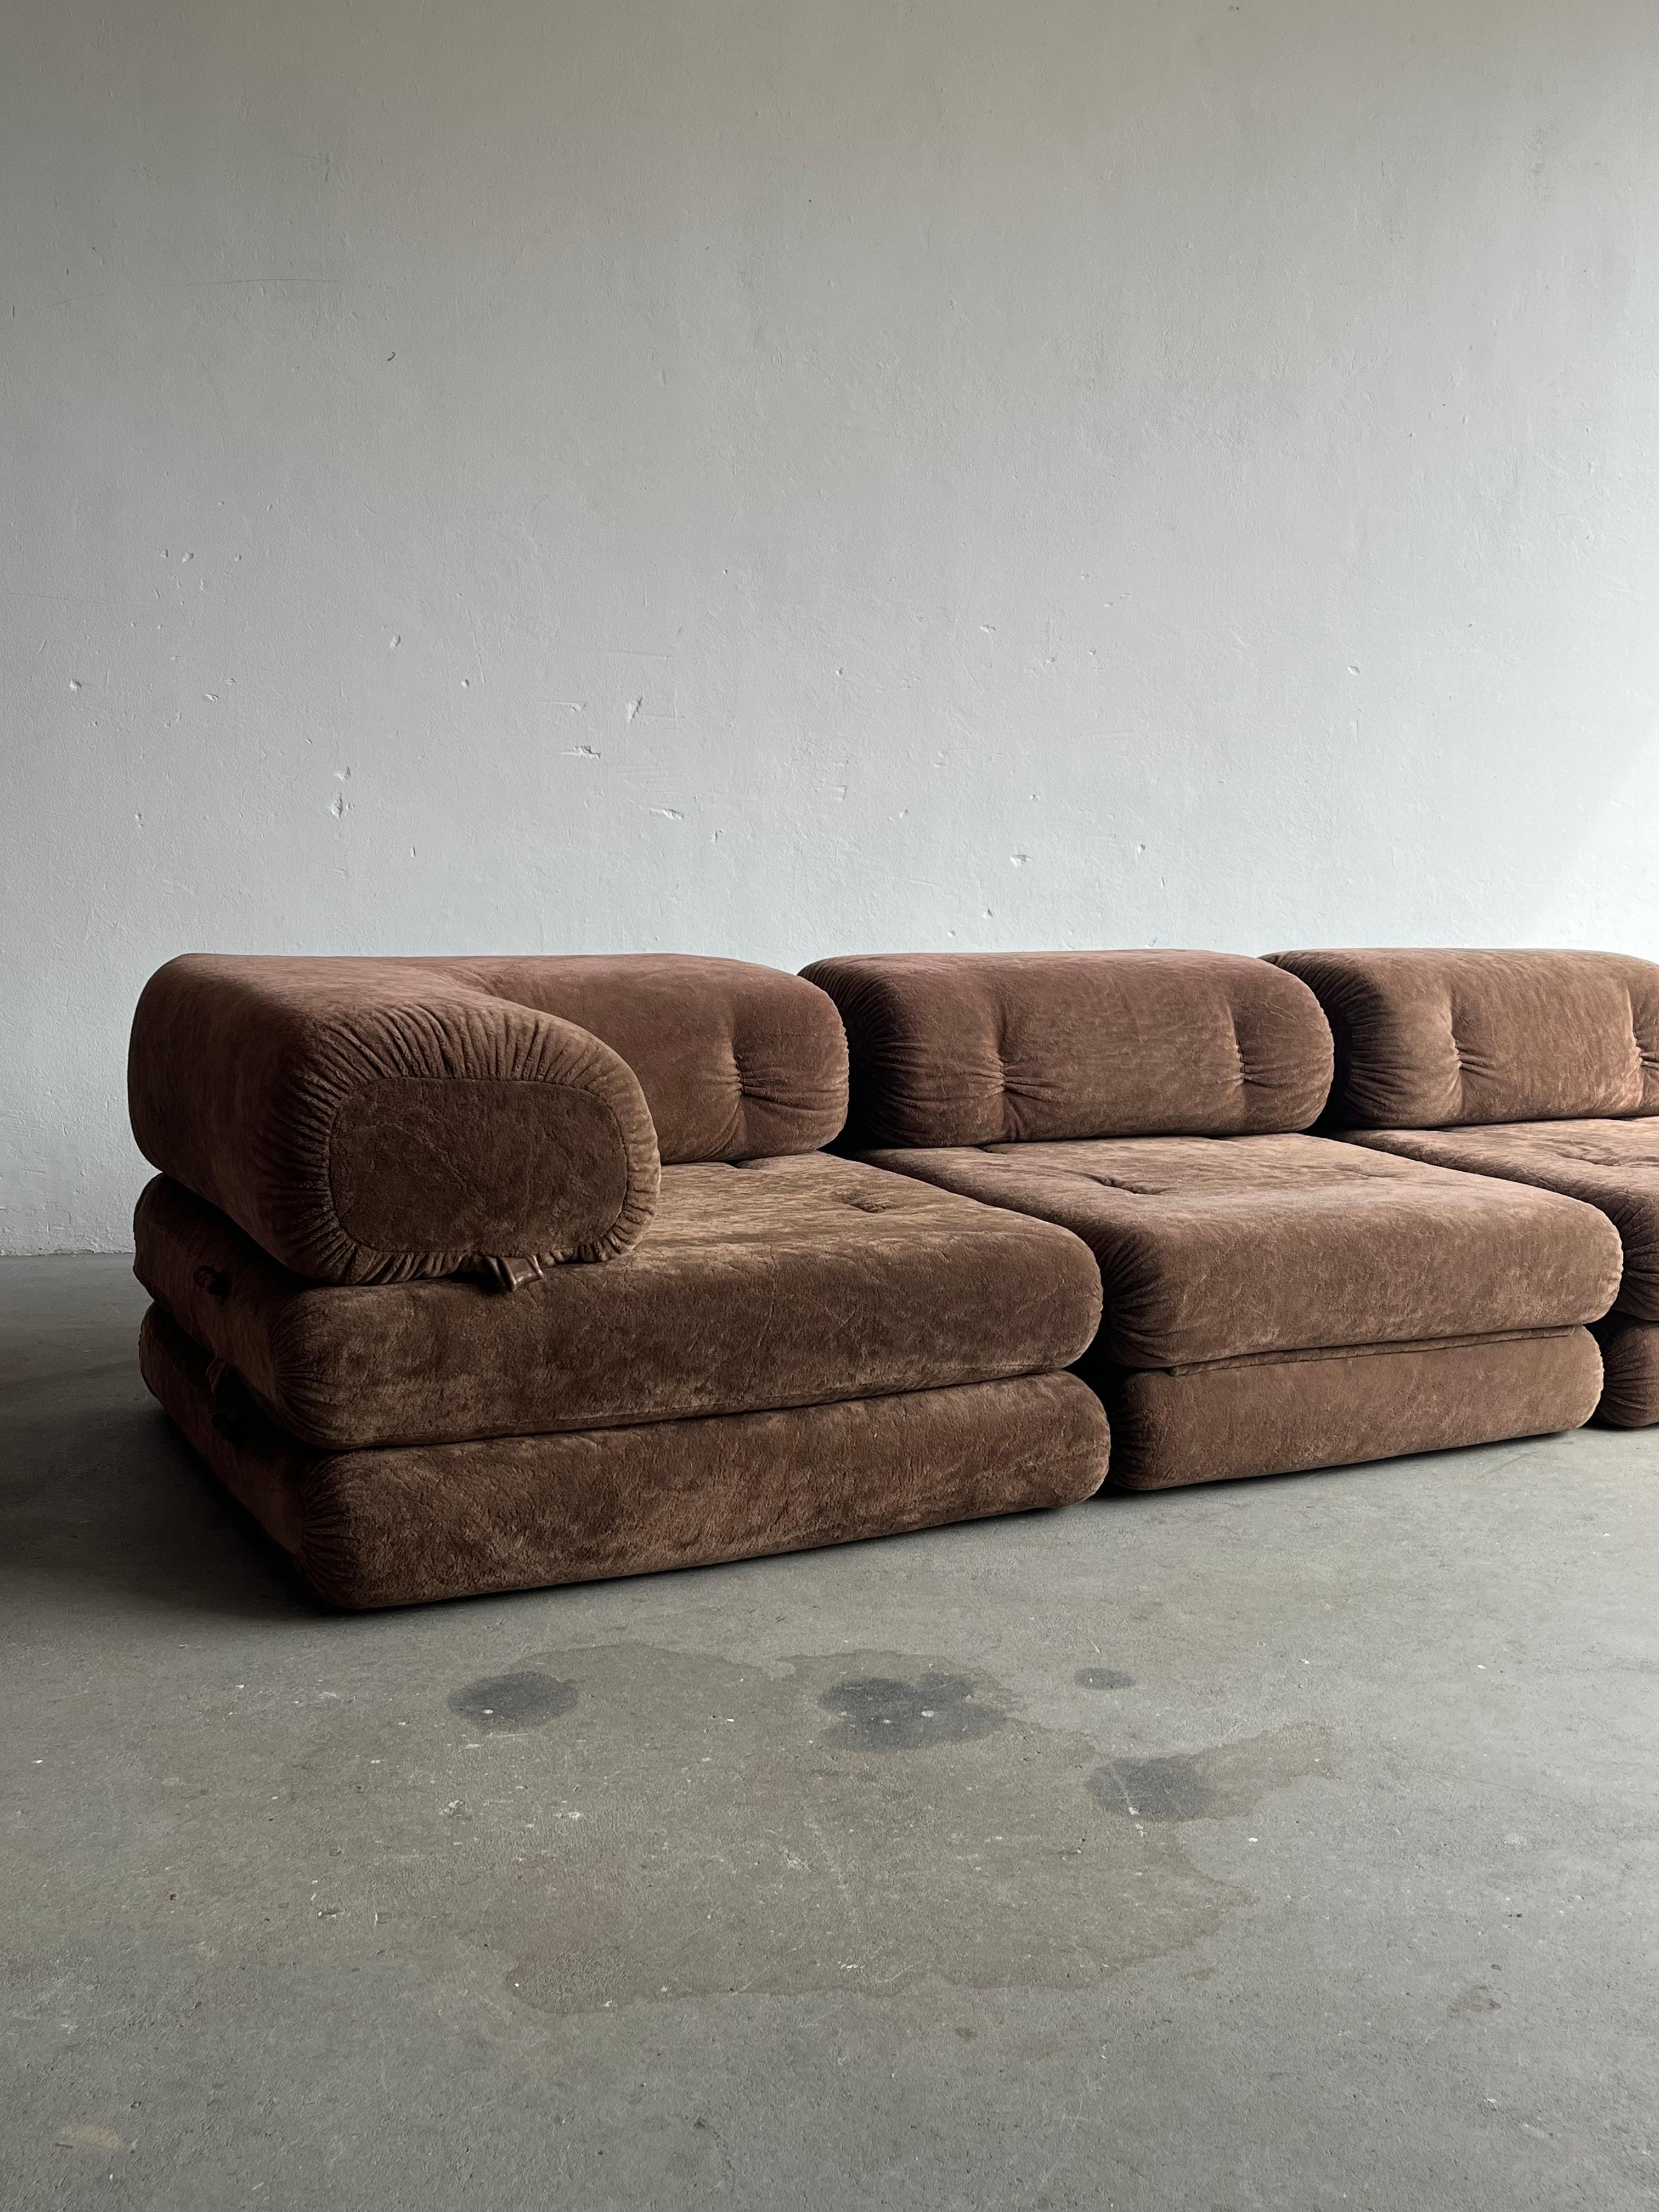 Midcentury-Modern 'Triade' Modular Daybed Sofa by Wittmann, 1970s, Austria 1